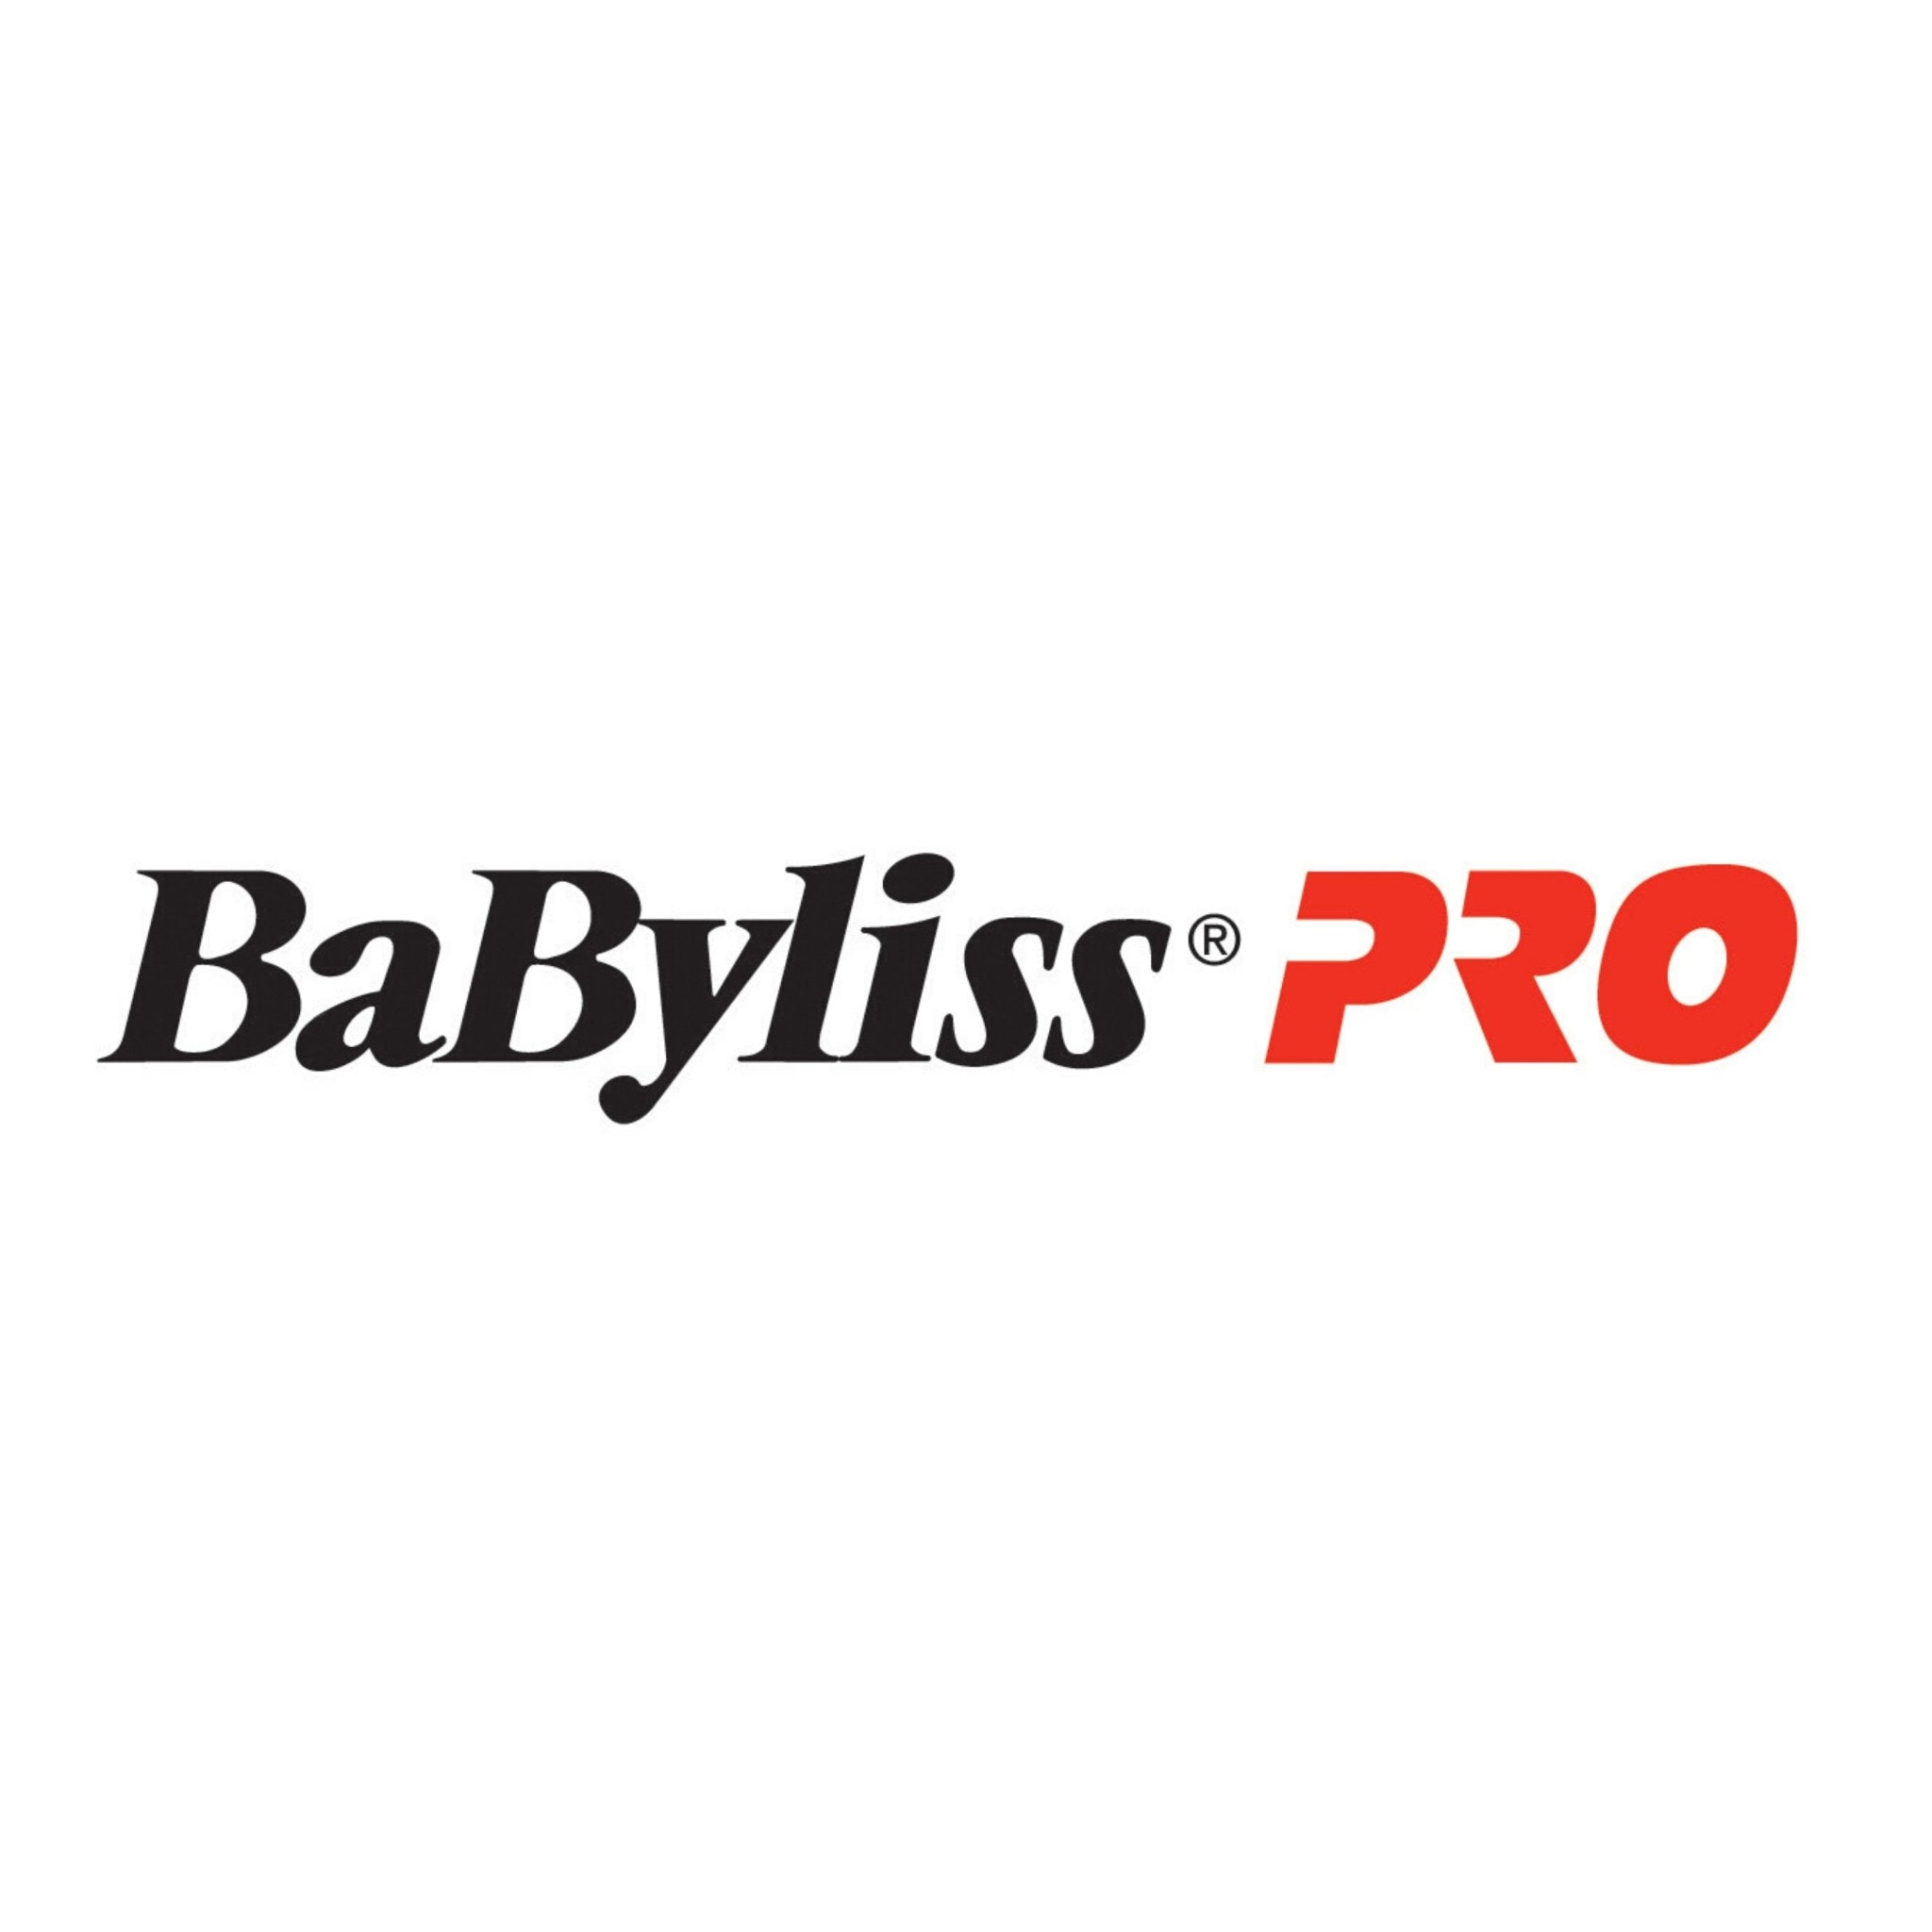 Babyliss Pro - HairBeautyInk